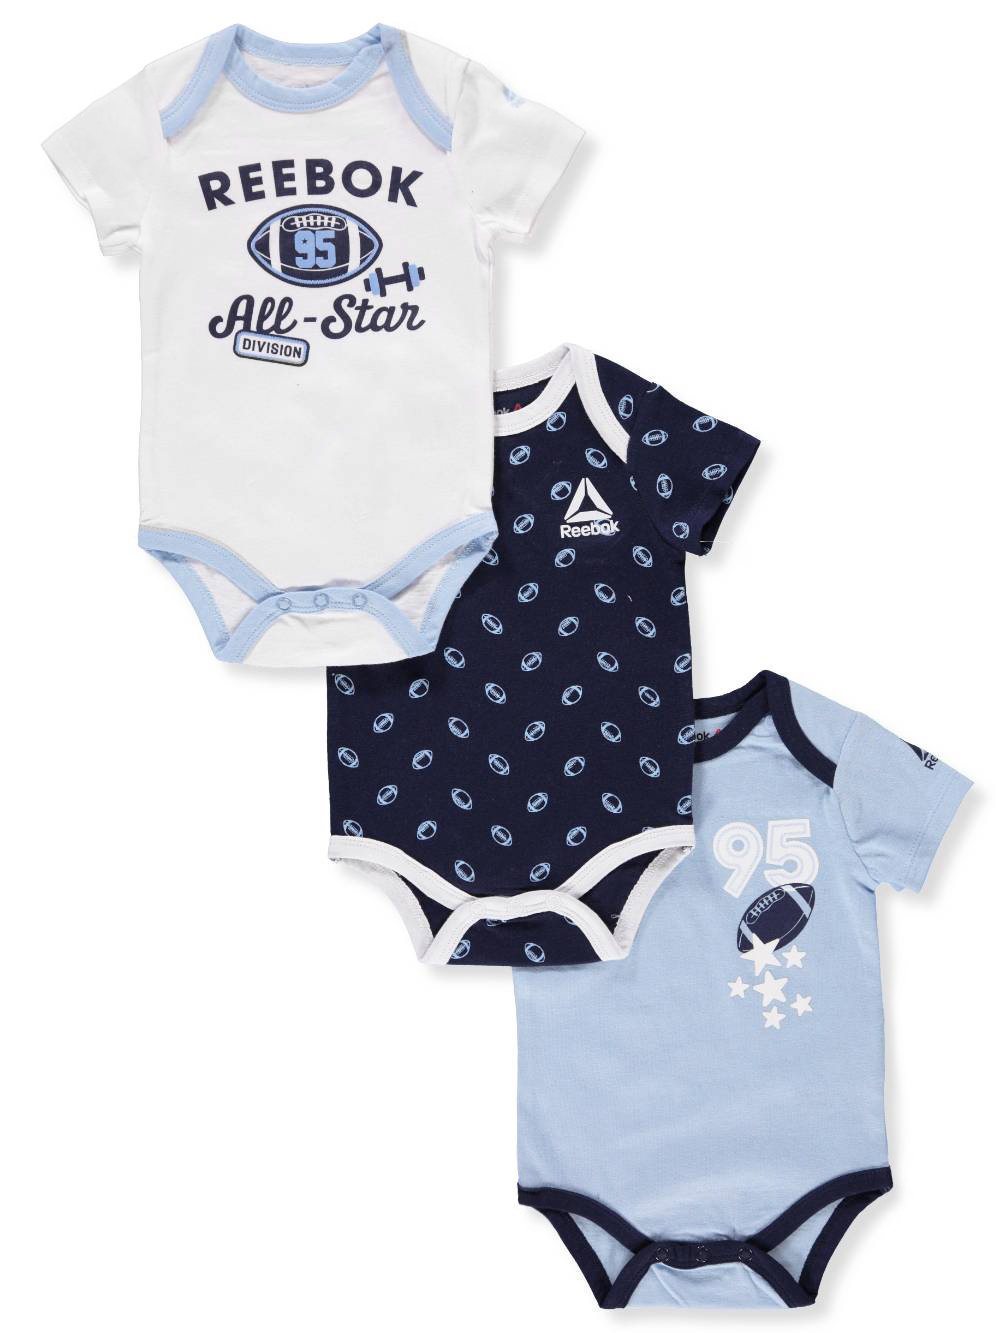 reebok baby clothing